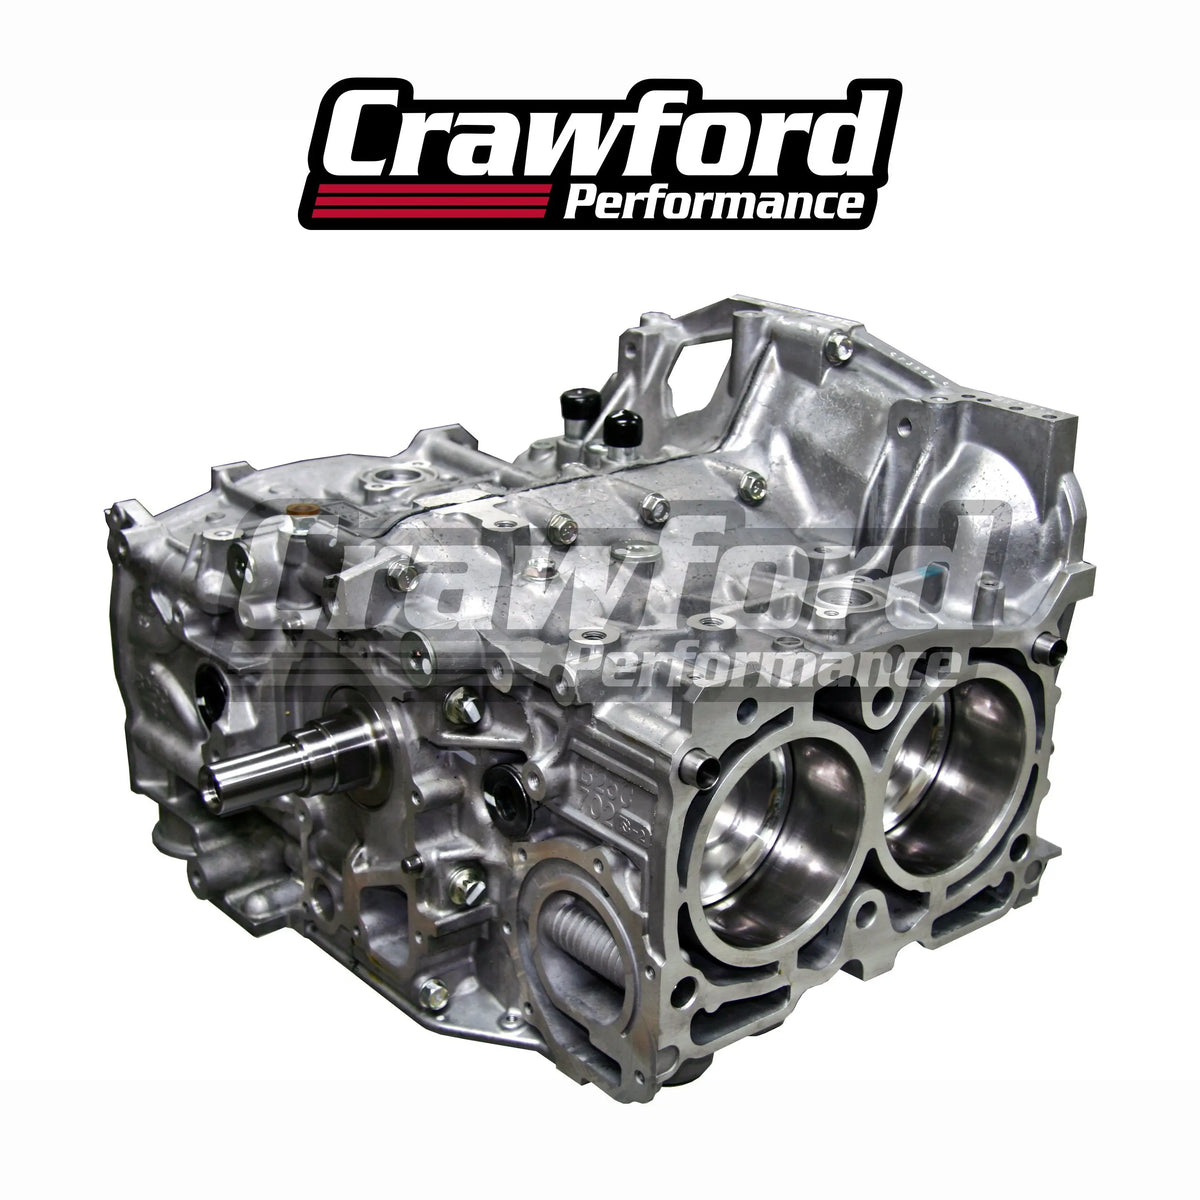 MOTUL Engine Break-In Oil: 5100 4T 10W40 - Crawford Performance